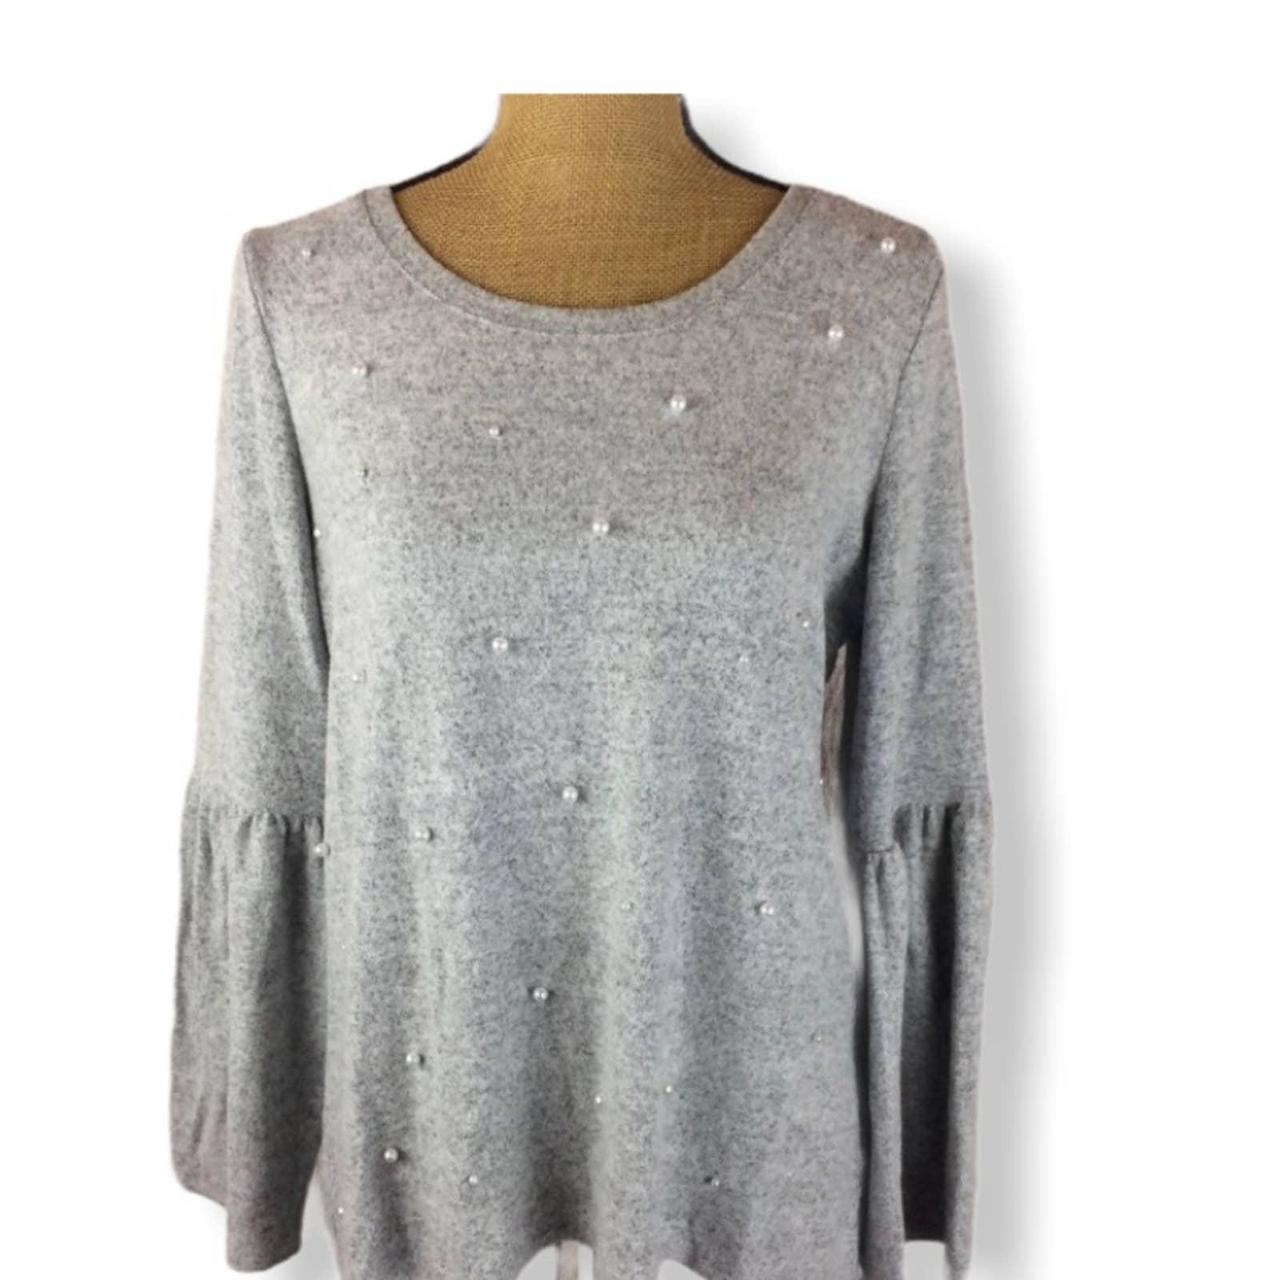 Simply Vera Vera Wang Sweater, Women's Size Small, Gray, Pullover